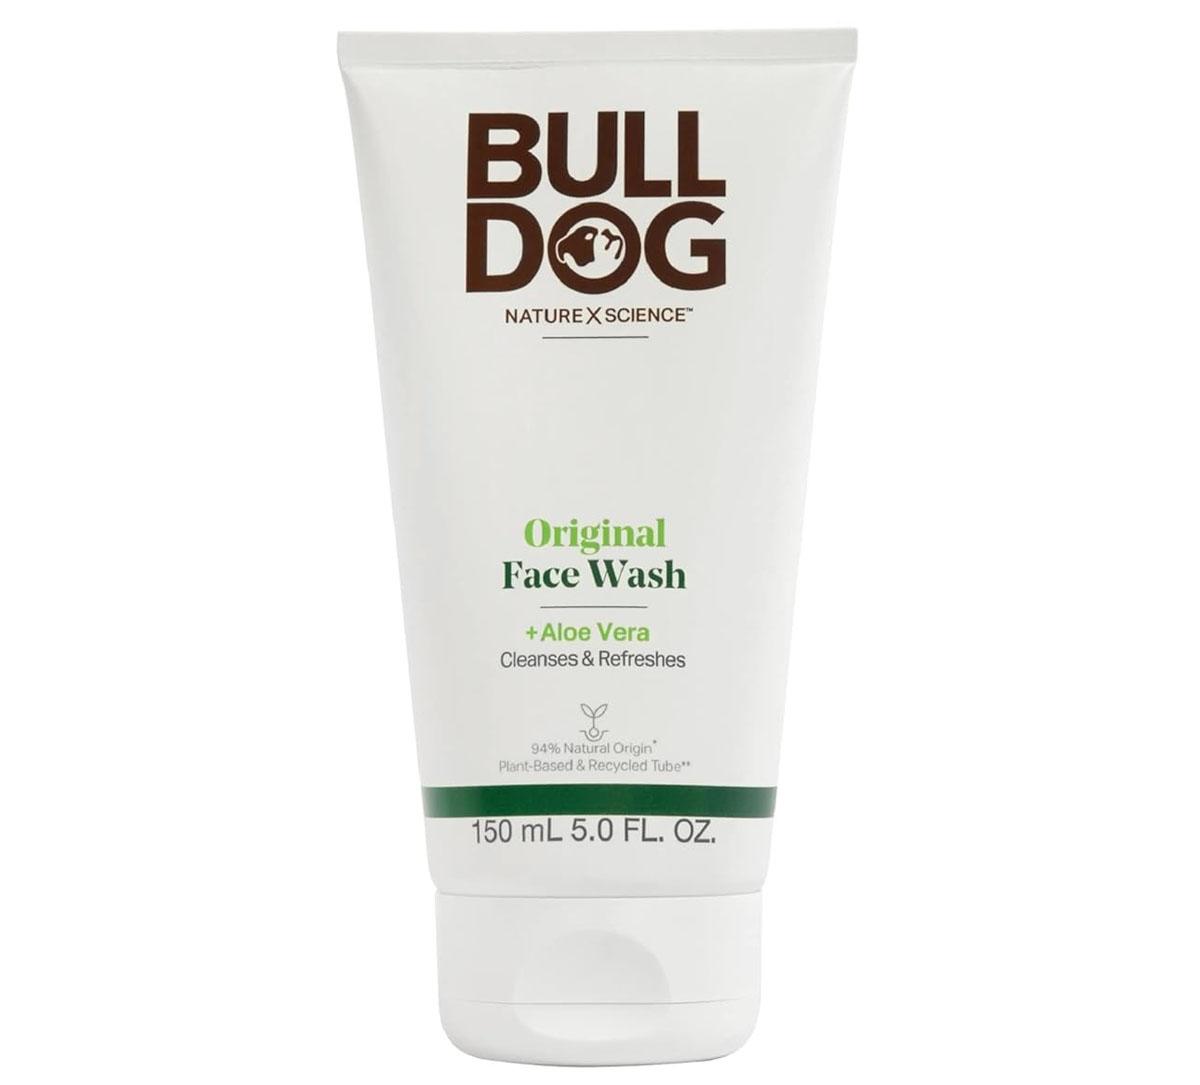 Bulldog Mens Skincare and Grooming Original Face Wash Scrub for $2.64